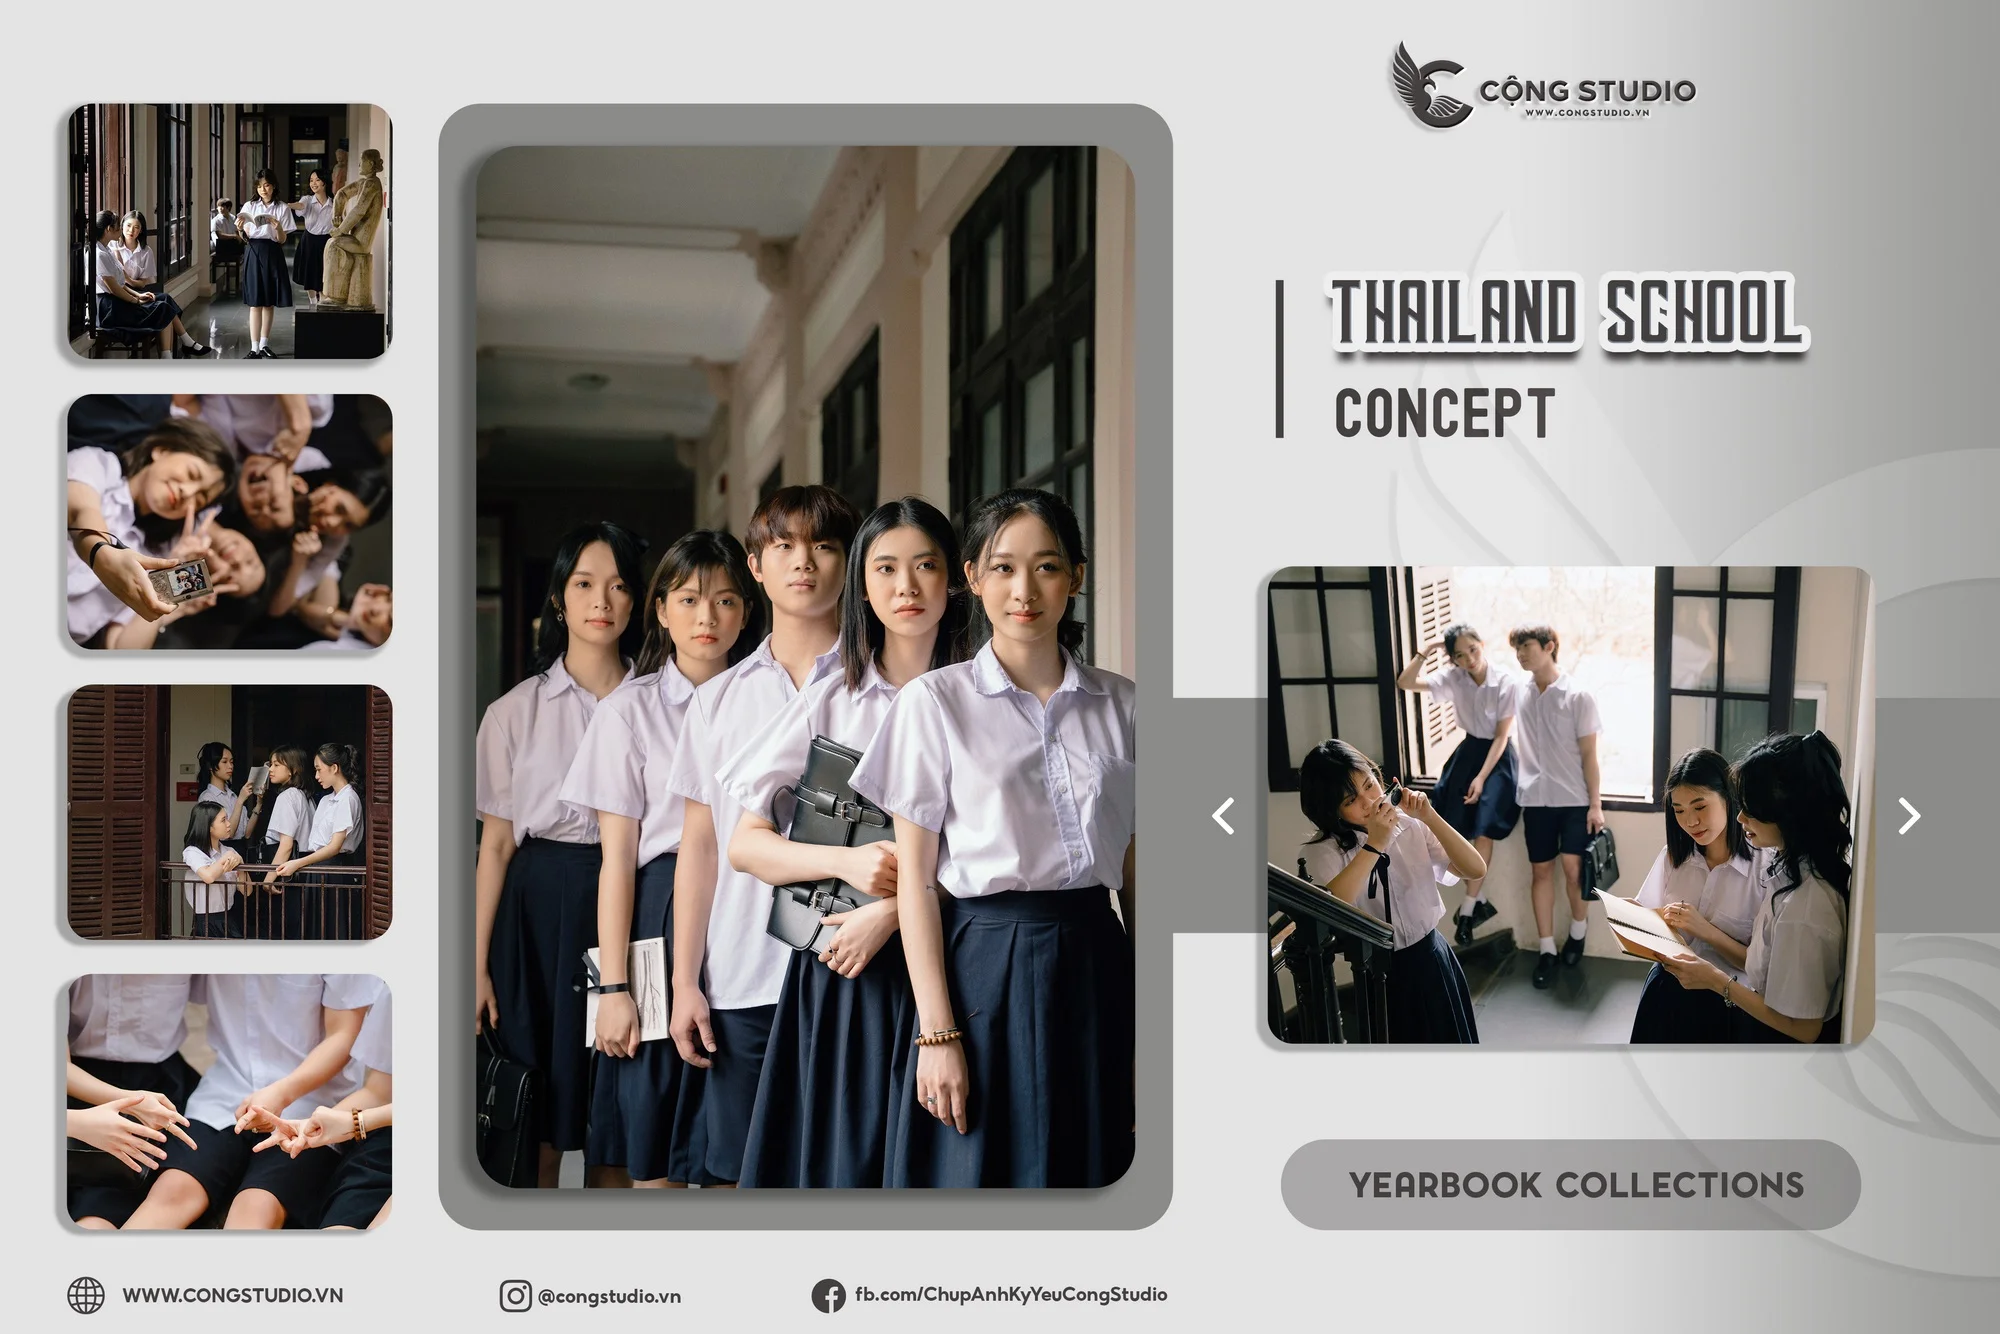 concept chụp ảnh kỷ yếu Thailand school 1 concept